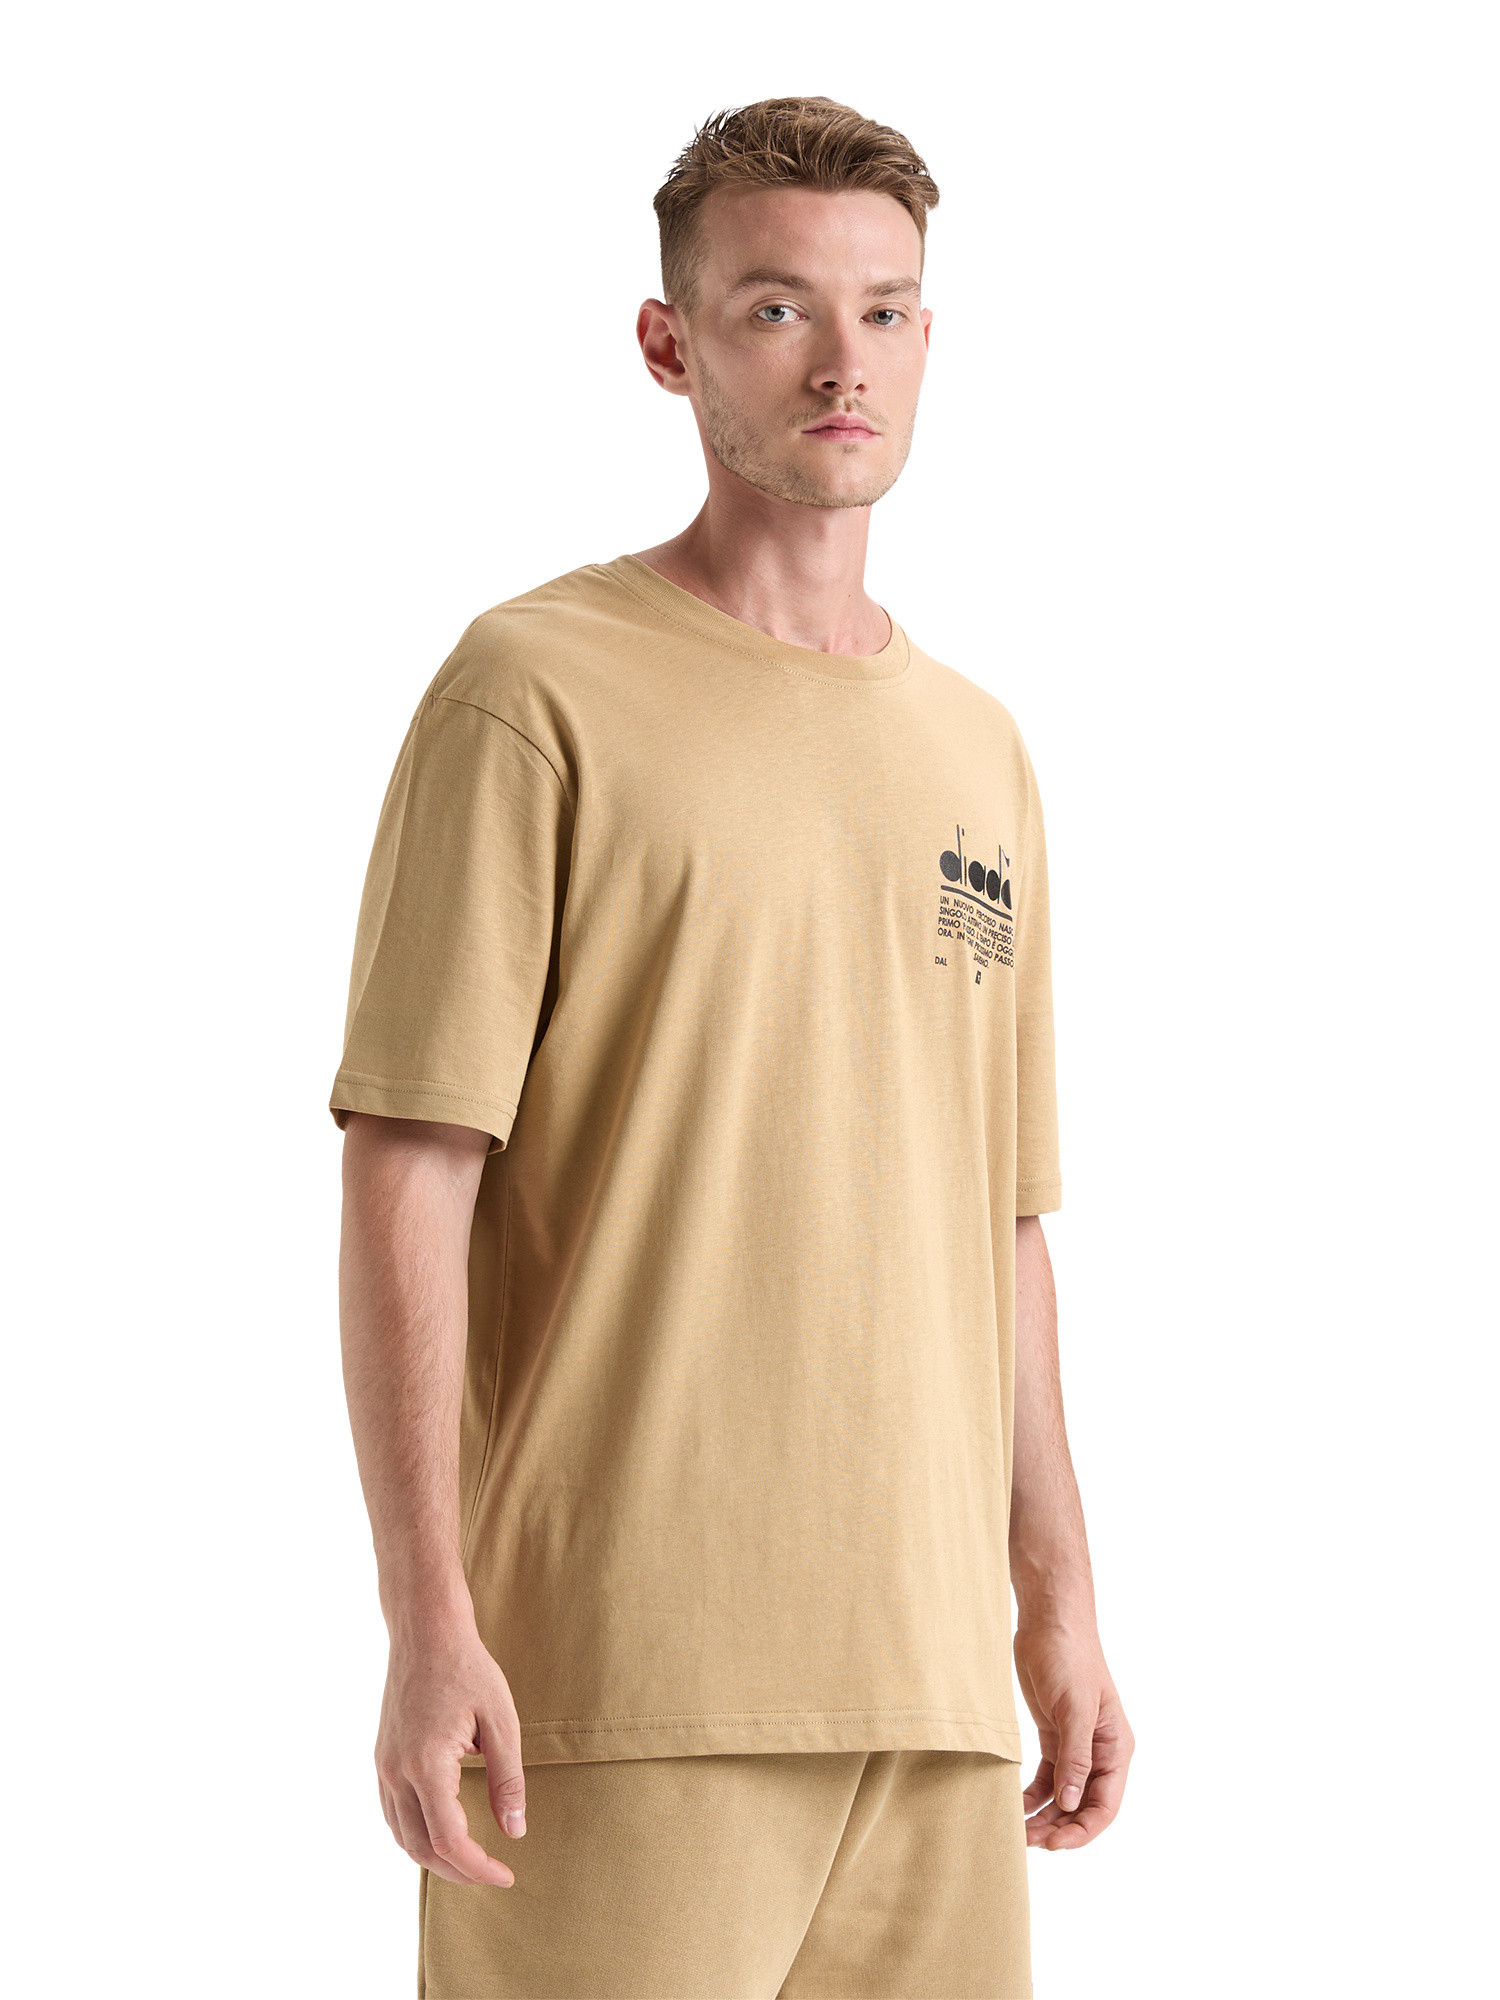 Diadora - Manifesto cotton T-shirt, Beige, large image number 2